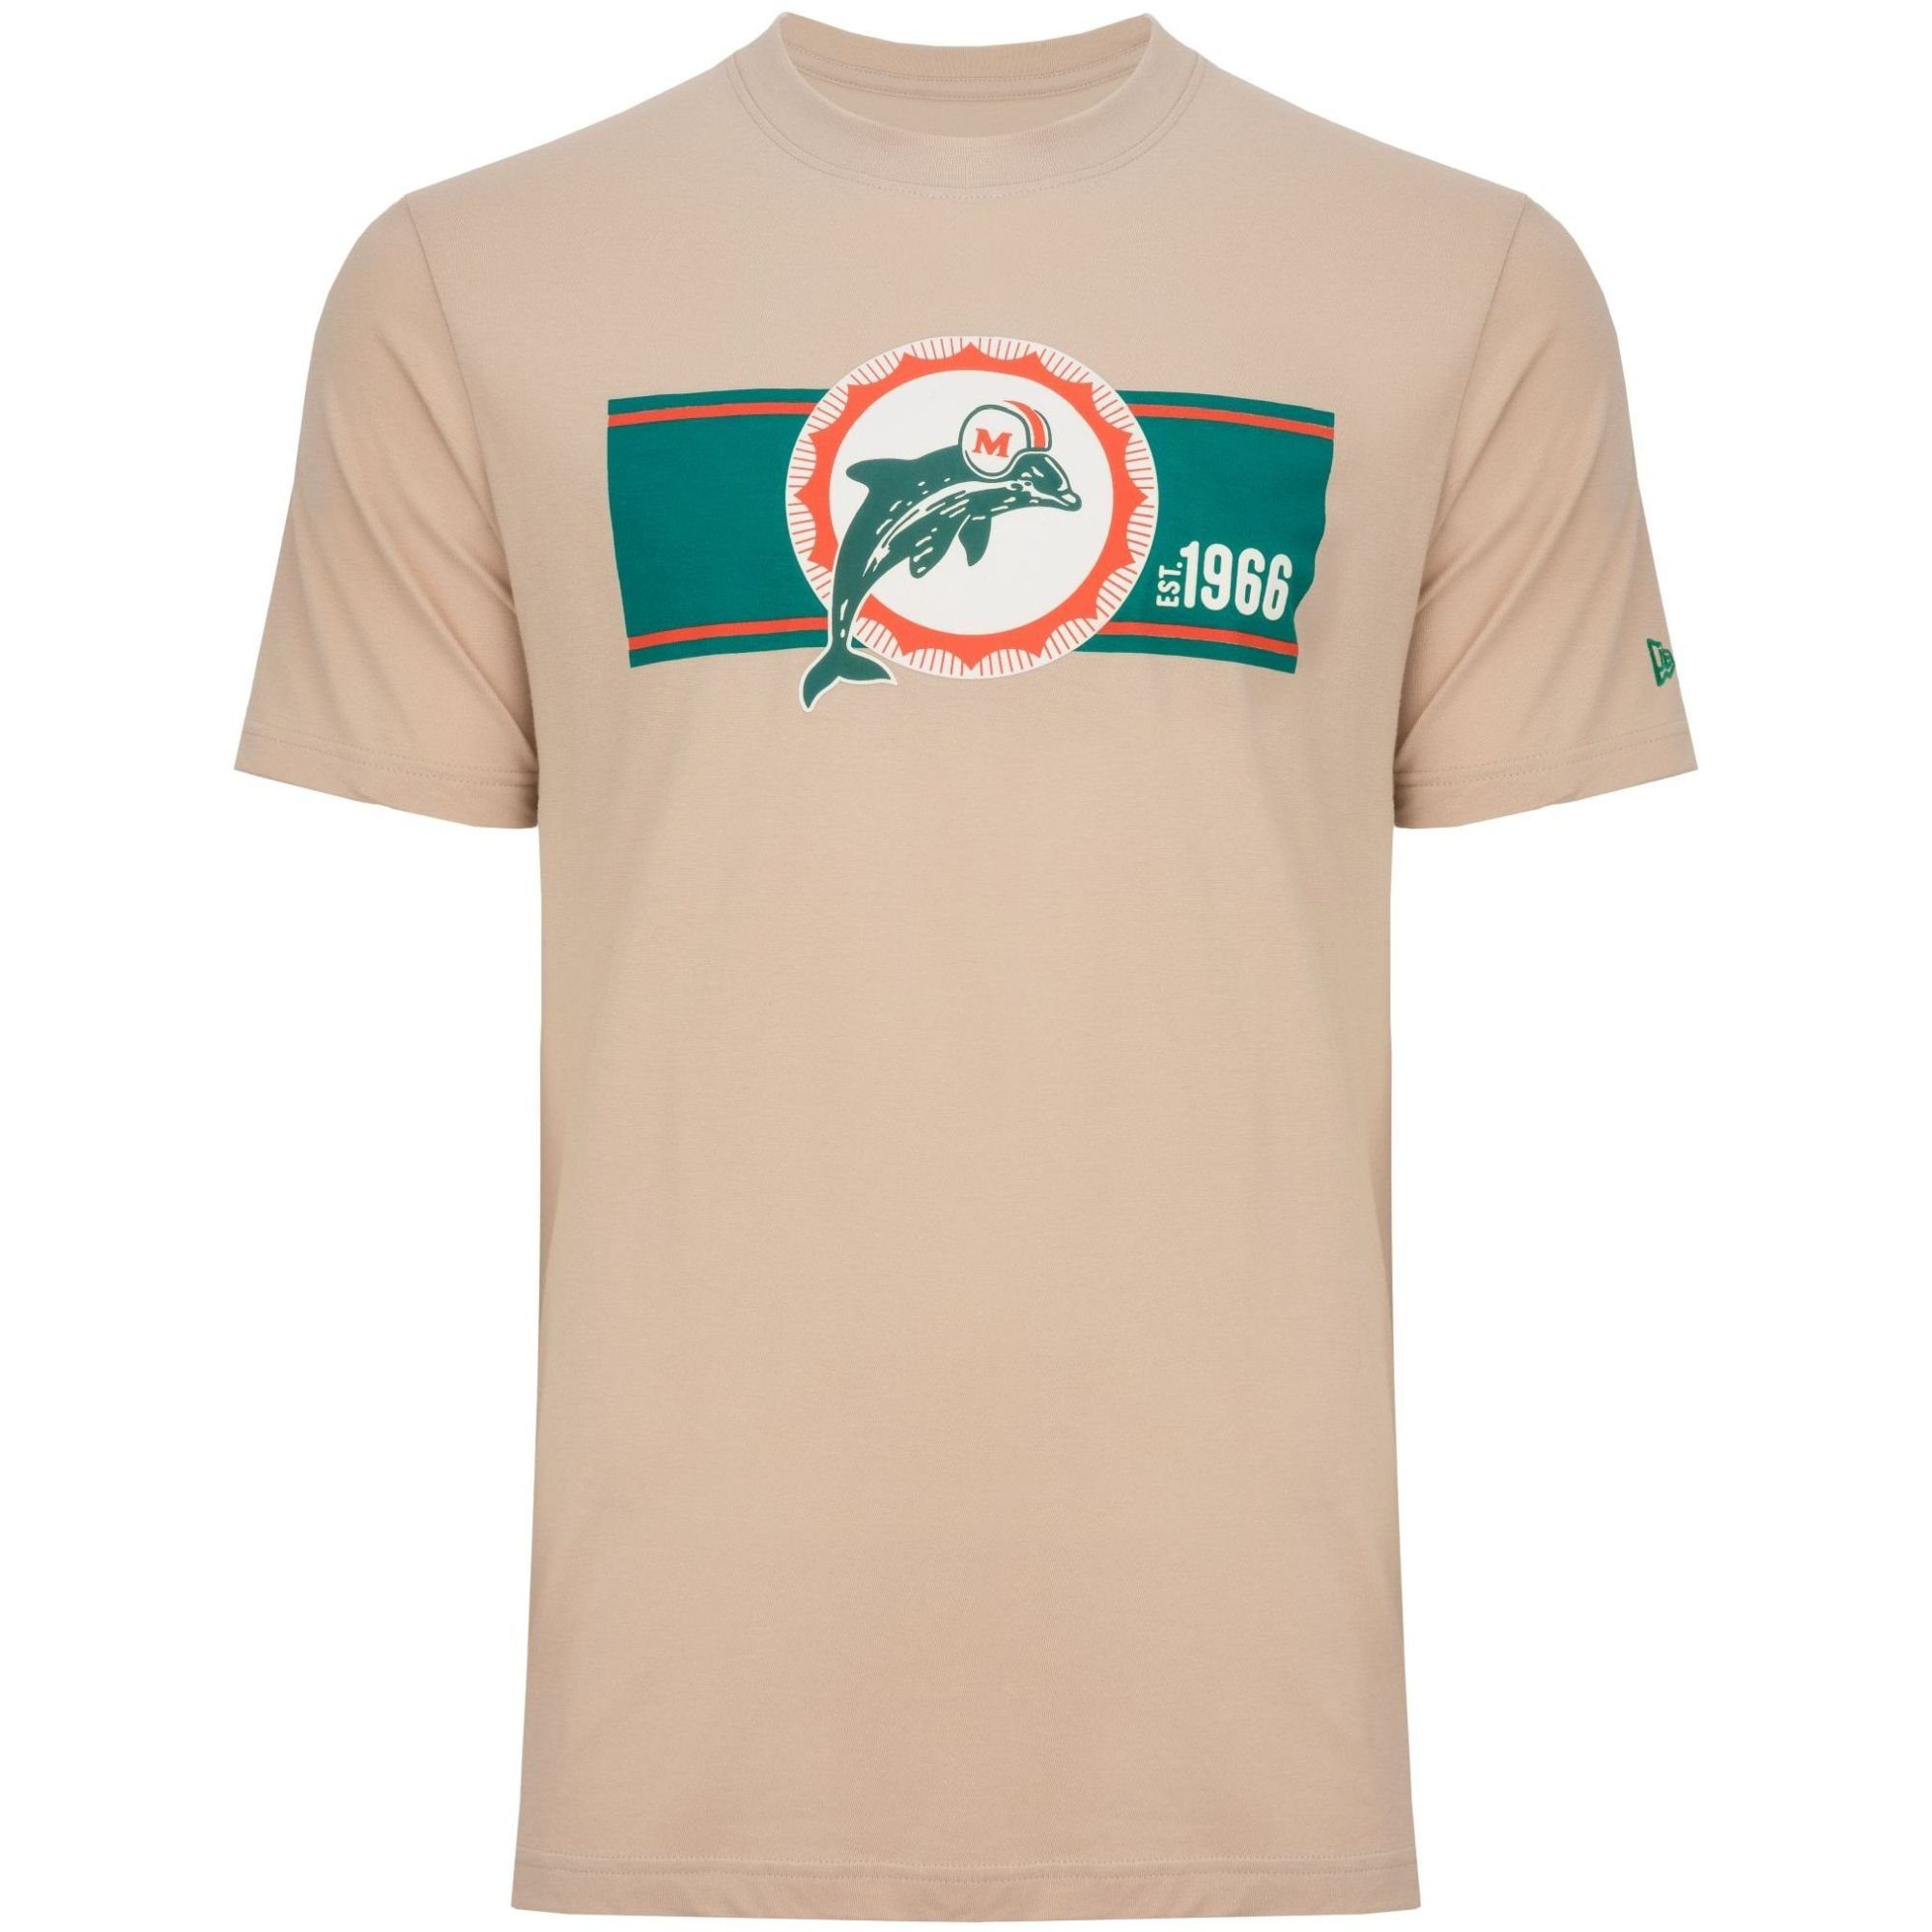 Print-Shirt Era SIDELINE Dolphins NFL Miami New